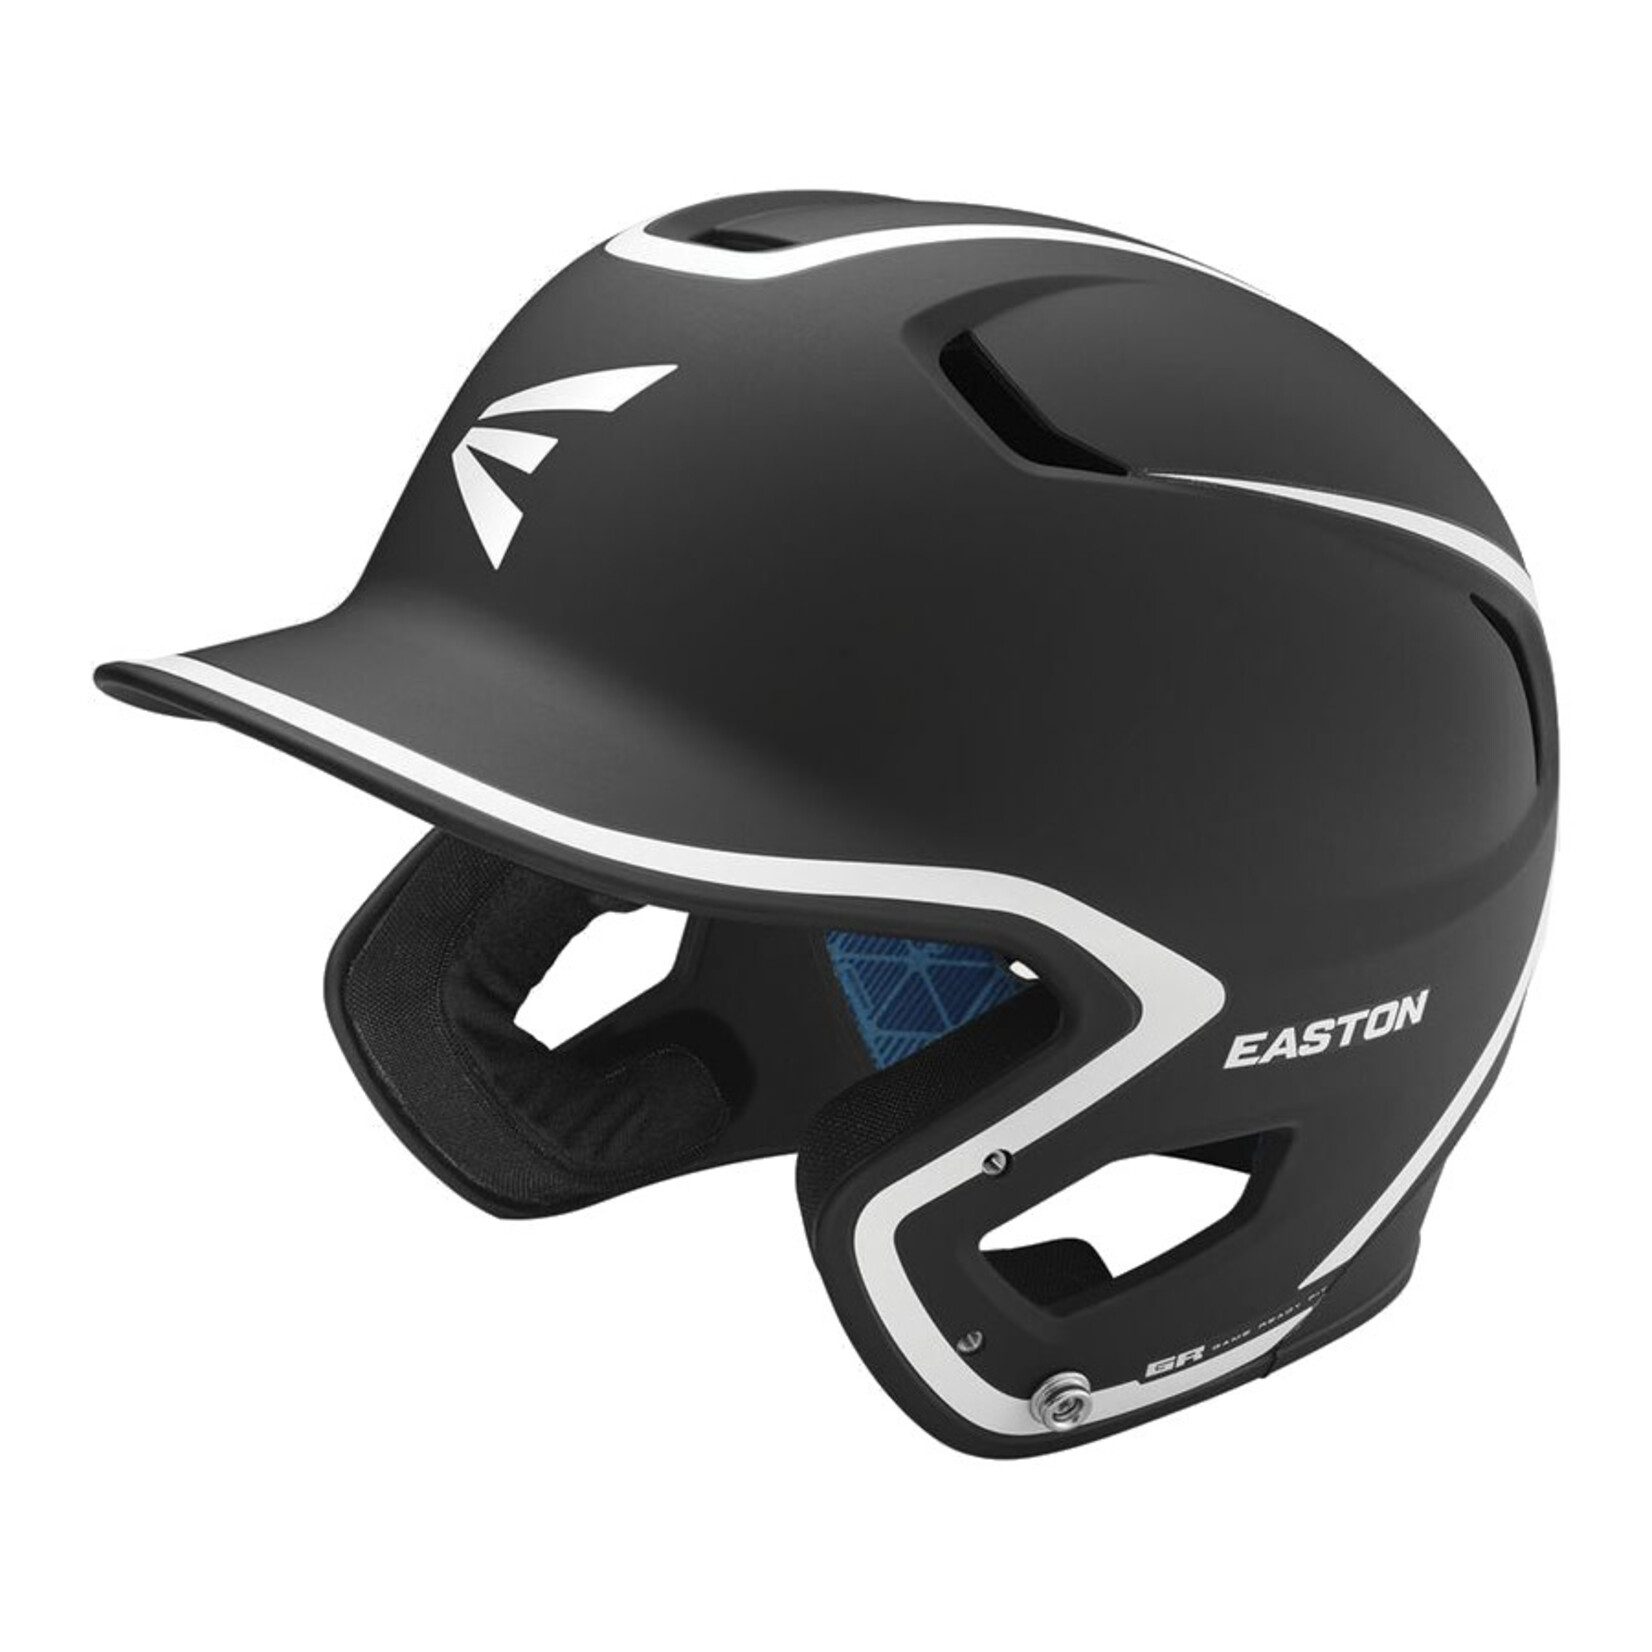 Easton Easton Z5 Matte Two-Tone - Batting Helmet